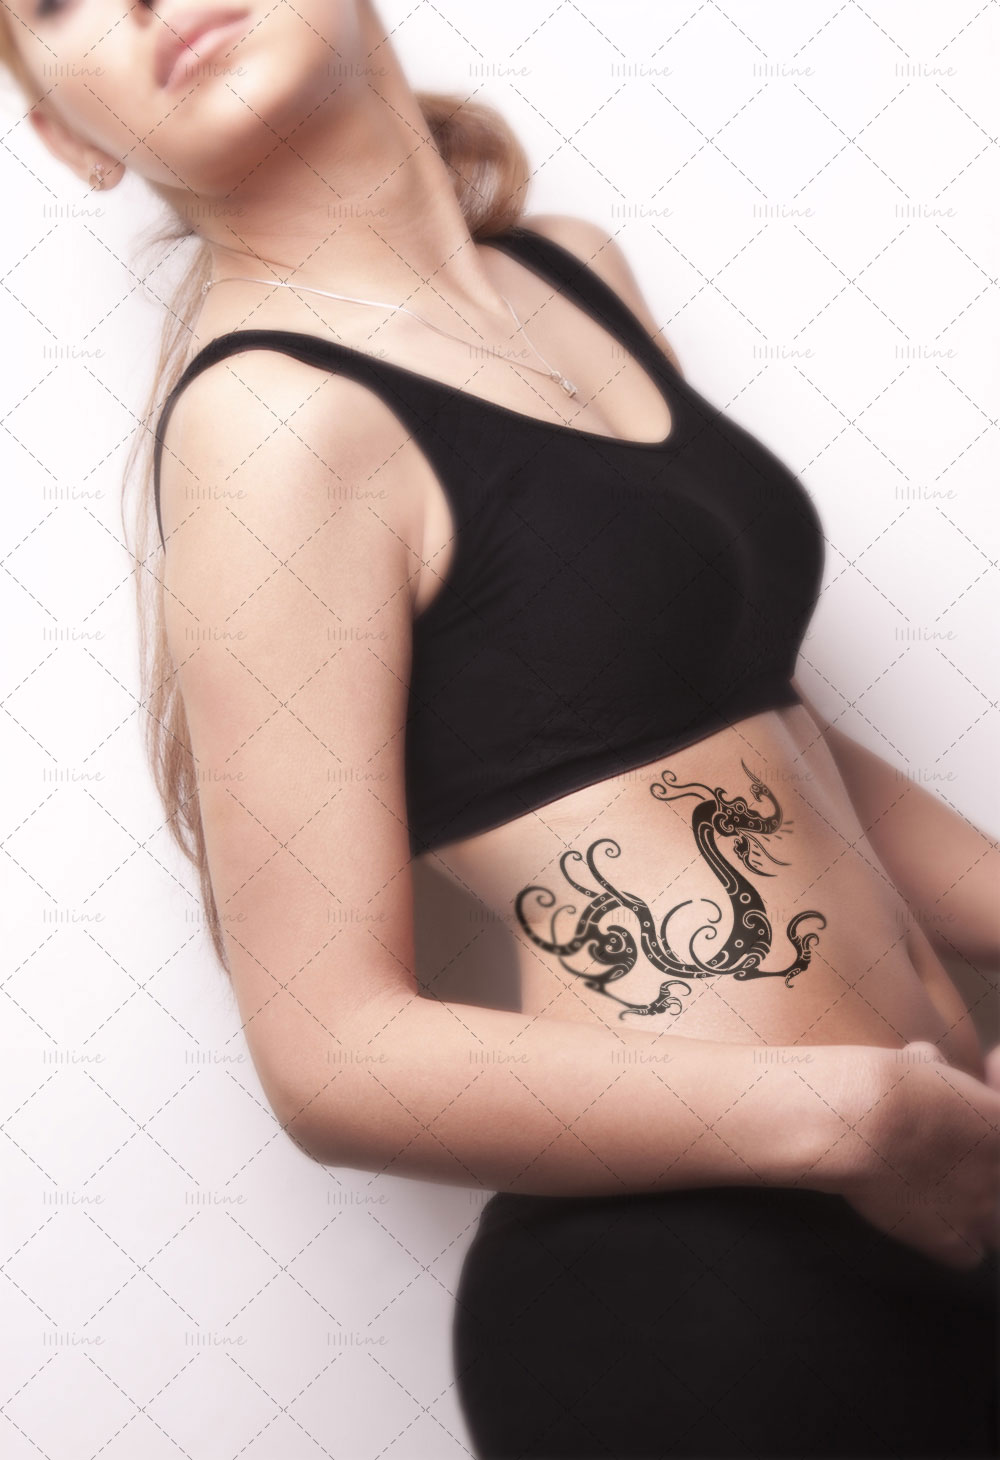 dragon totem tattoo pattern vi eps pdf